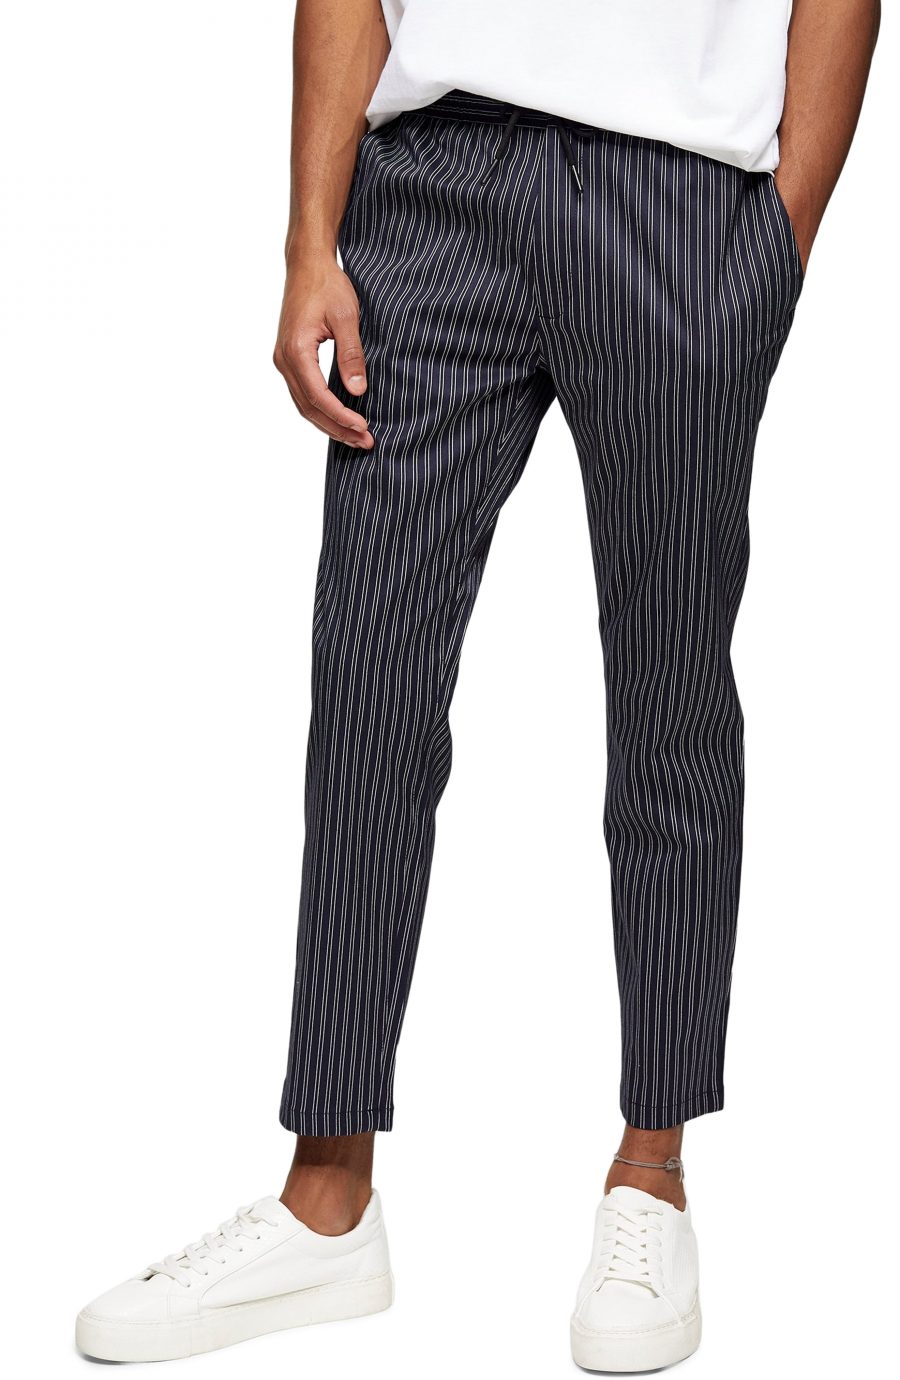 Men’s Topman Stripe Whyatt Pants, Size 30 x 32 - Blue | The Fashionisto